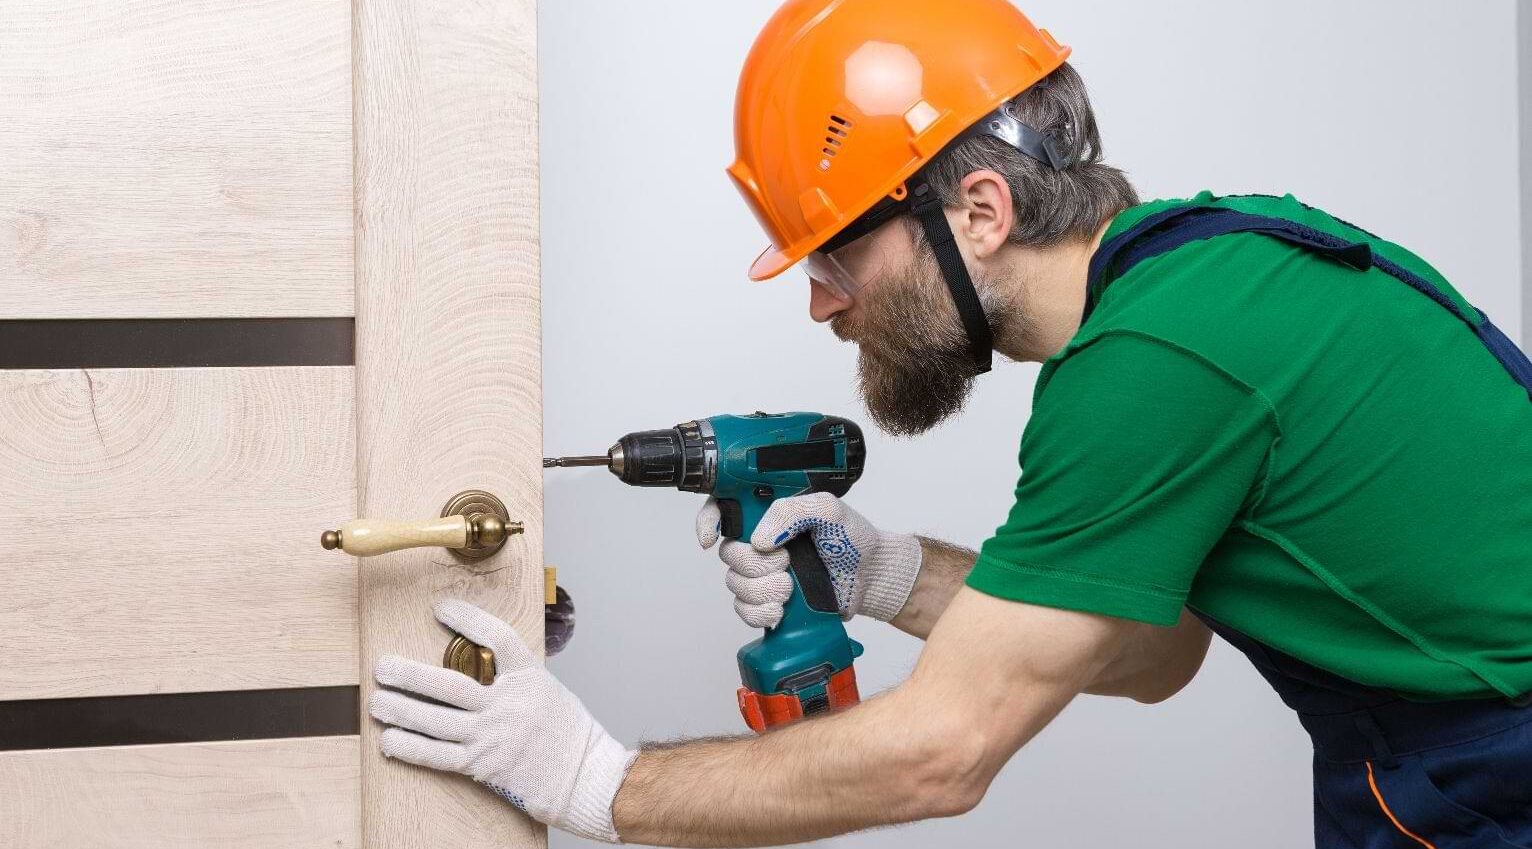 Locksmith Fixing Door 1 Aspect Ratio 1472 816